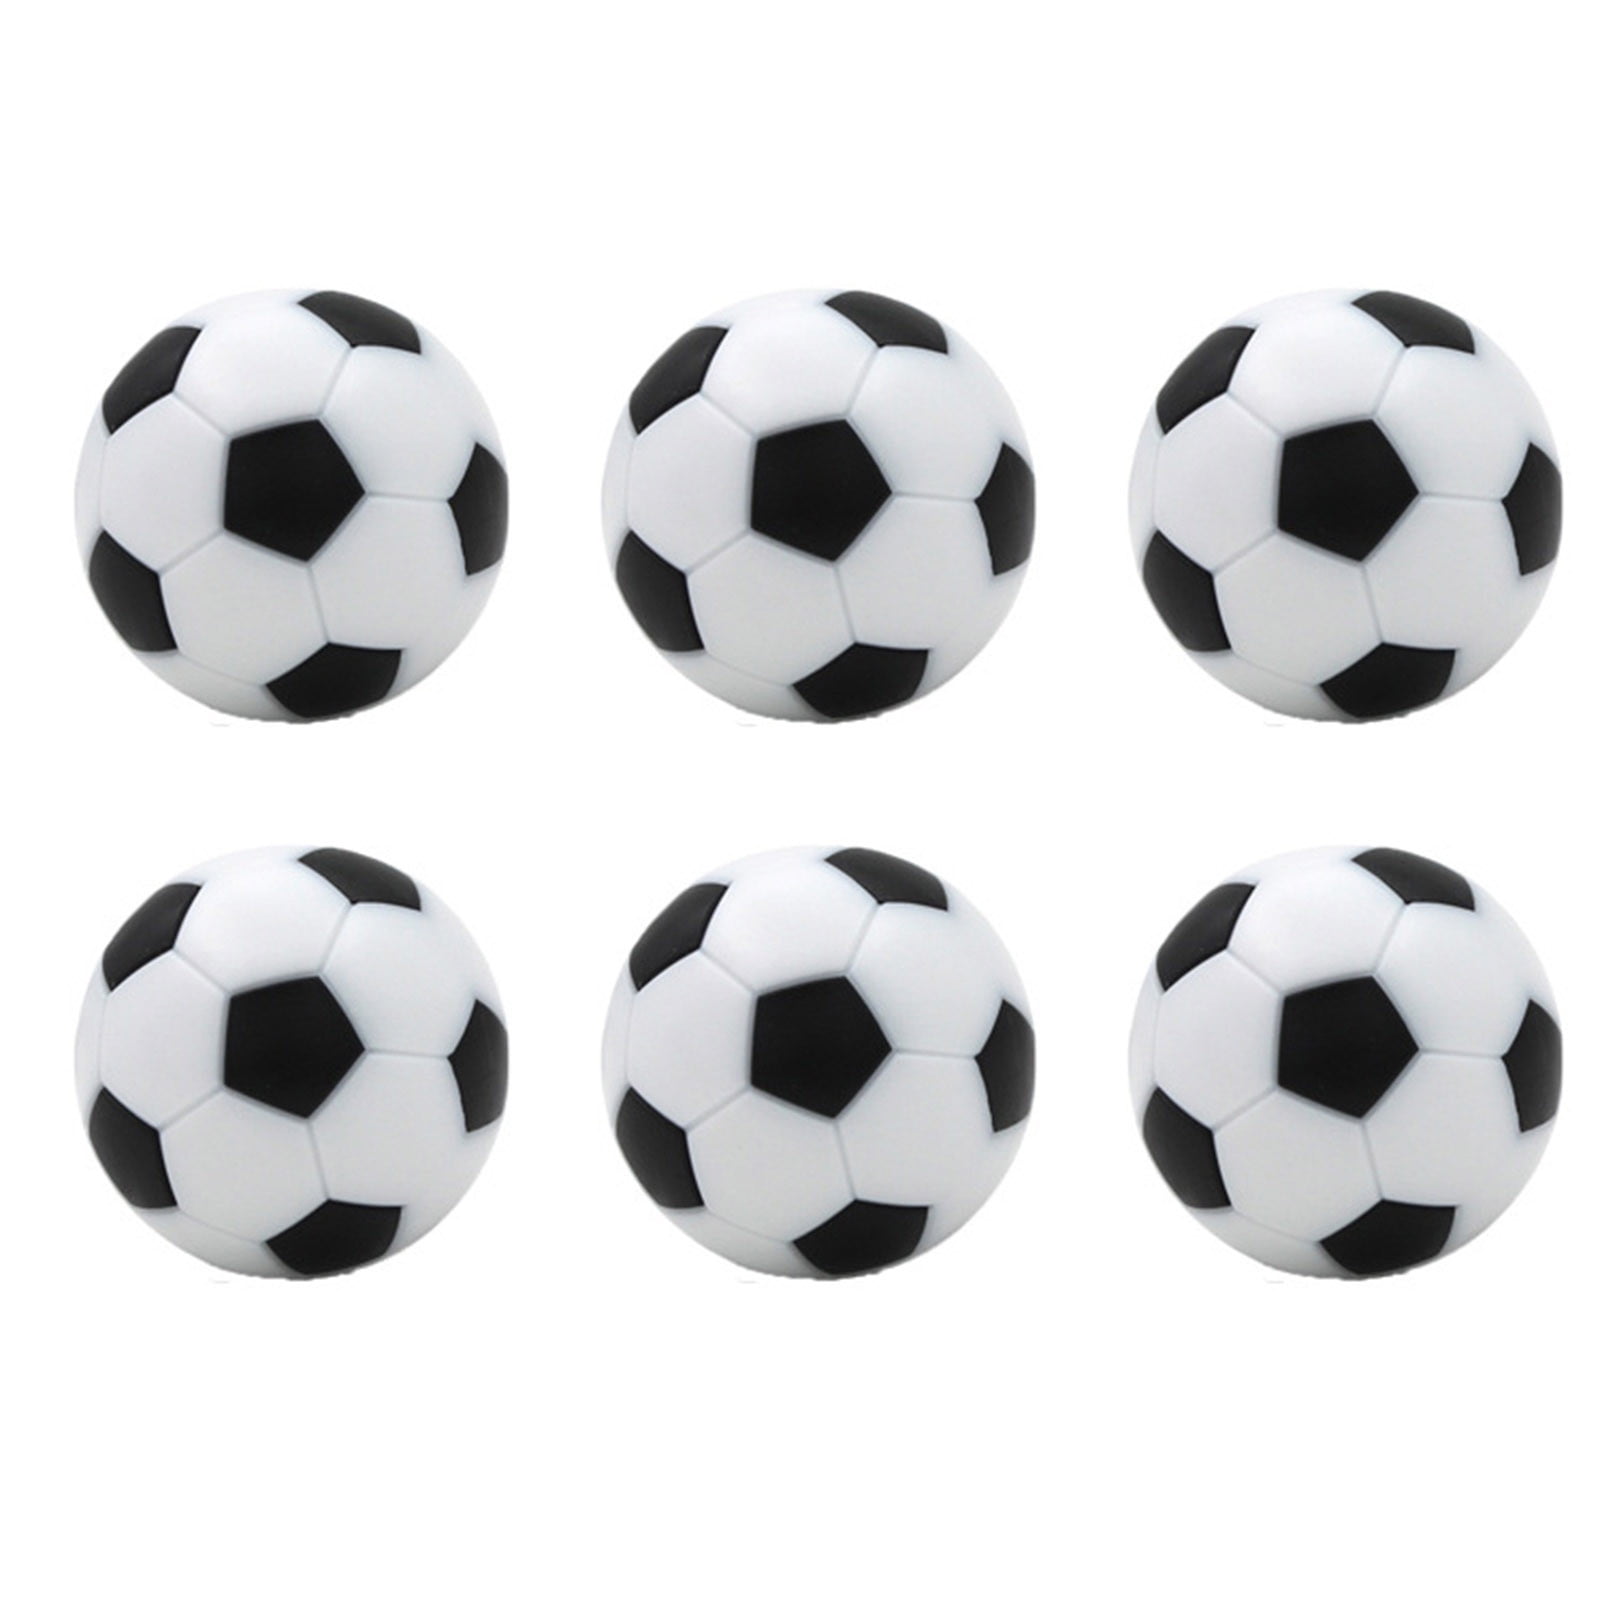 10 Foosballs 5 Black & White Engraved & 5 Natural-Colored Cork Table Soccer Bal 